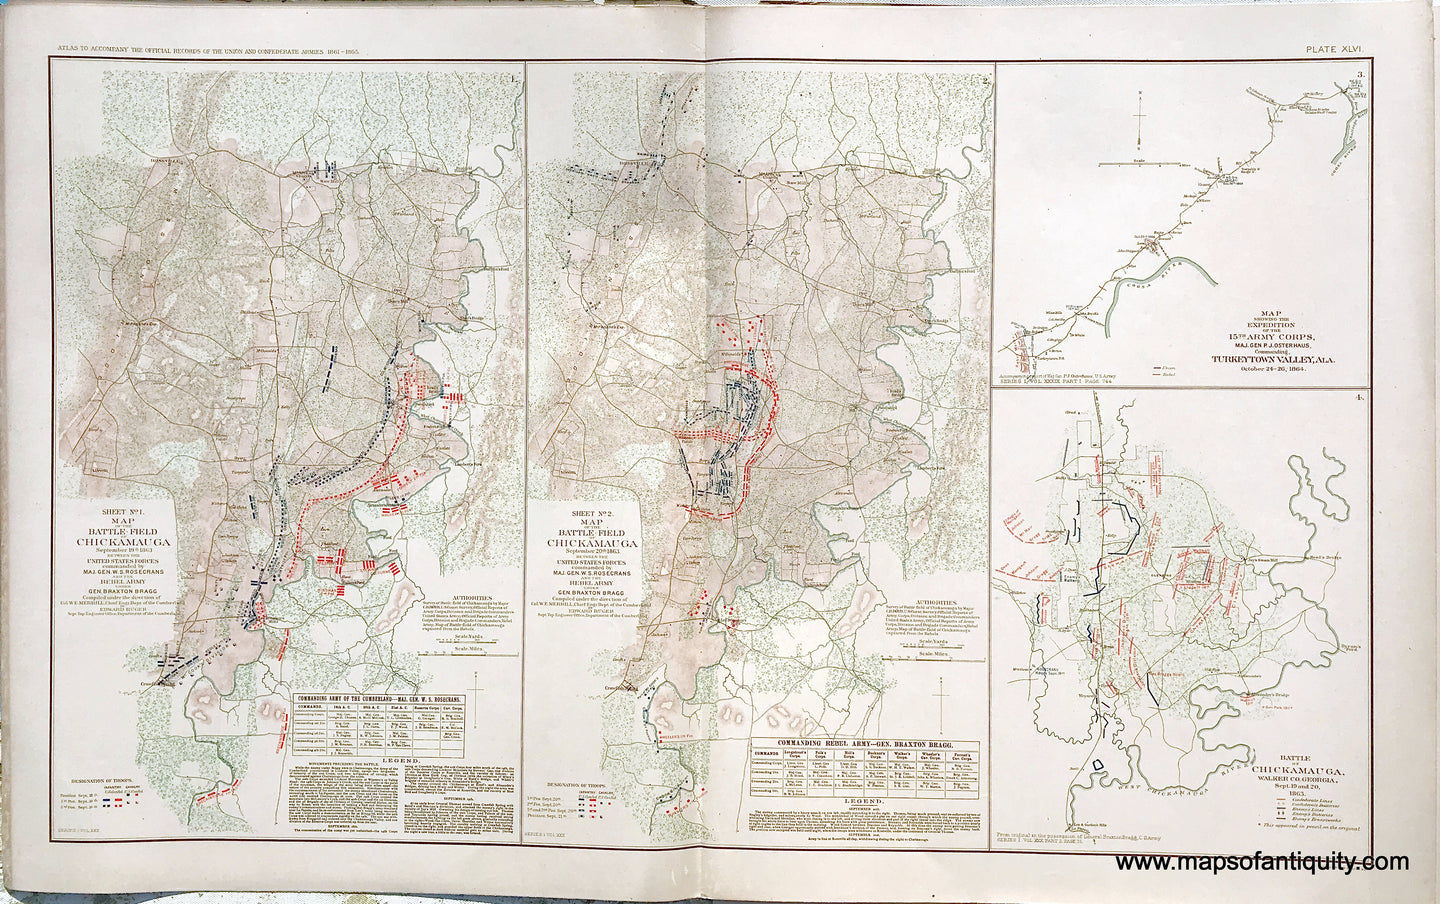 Antique-Lithograph-Print-Plate-46.-Battle-Field-at-Chickamauga-September-19th-1863-(sheet-No.1)-/-Battle-Field-of-Chickamauga-September-20th-1863-(sheet-No.2)-/-Turkeytown-Valley-Ala.-October-24-26-1864-/-Battle-of-Chickamauga-September-19-and-20-1863.-1892-US-War-Dept.-Civil-War-Civil-War-1800s-19th-century-Maps-of-Antiquity